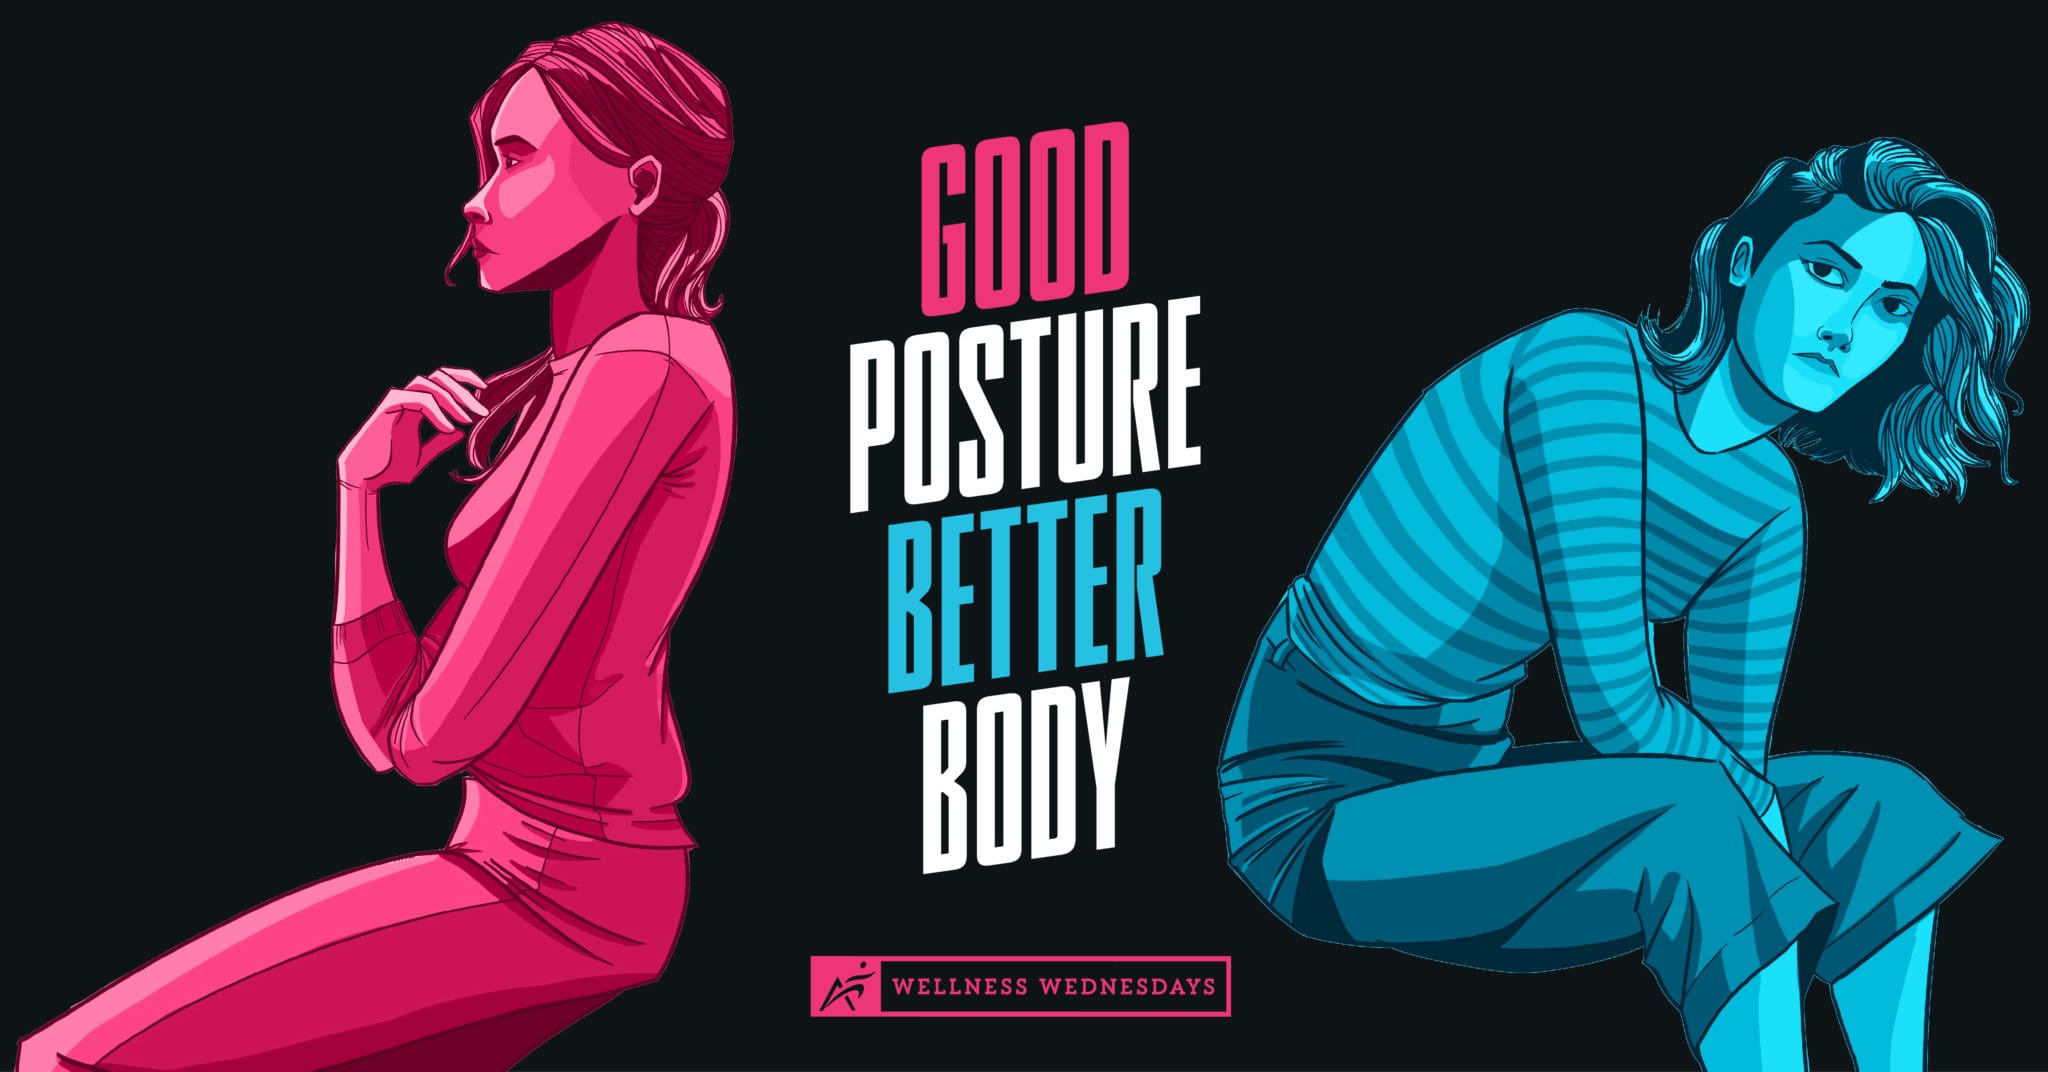 Good Posture Better Body